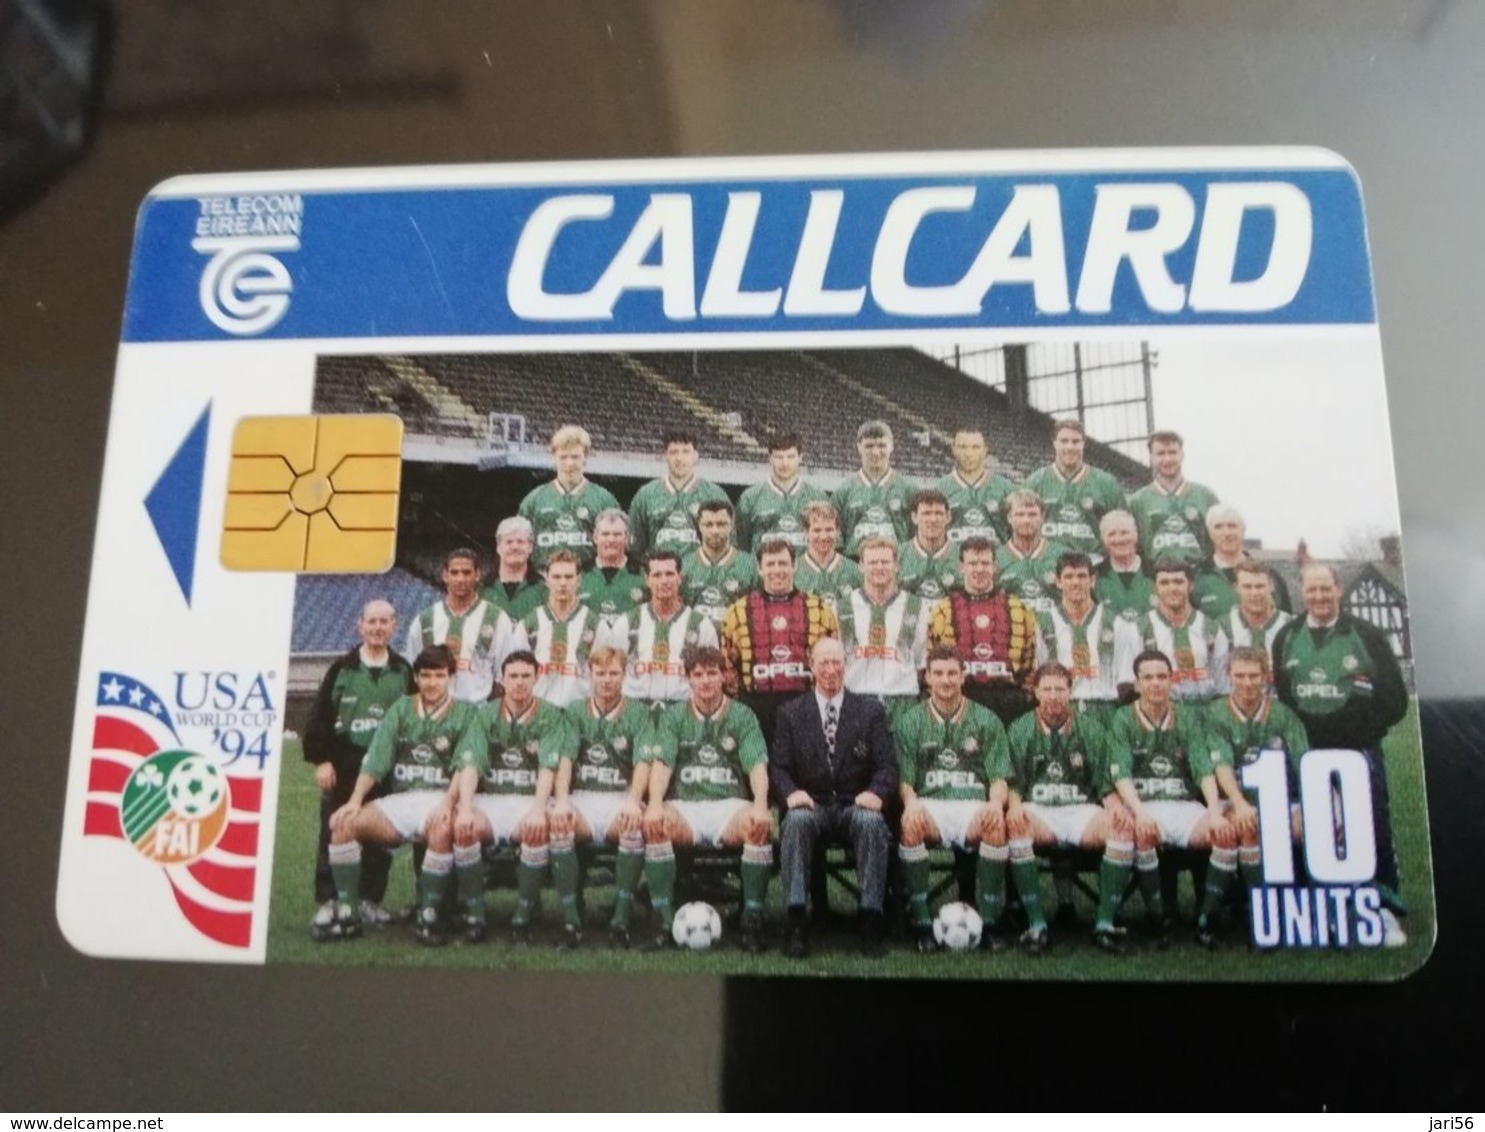 IRELAND /IERLANDE 10 Units Call CardUSA 94 NATIONAL FUTBOL TEAM CHIPCARD      ** 163** - Irlanda